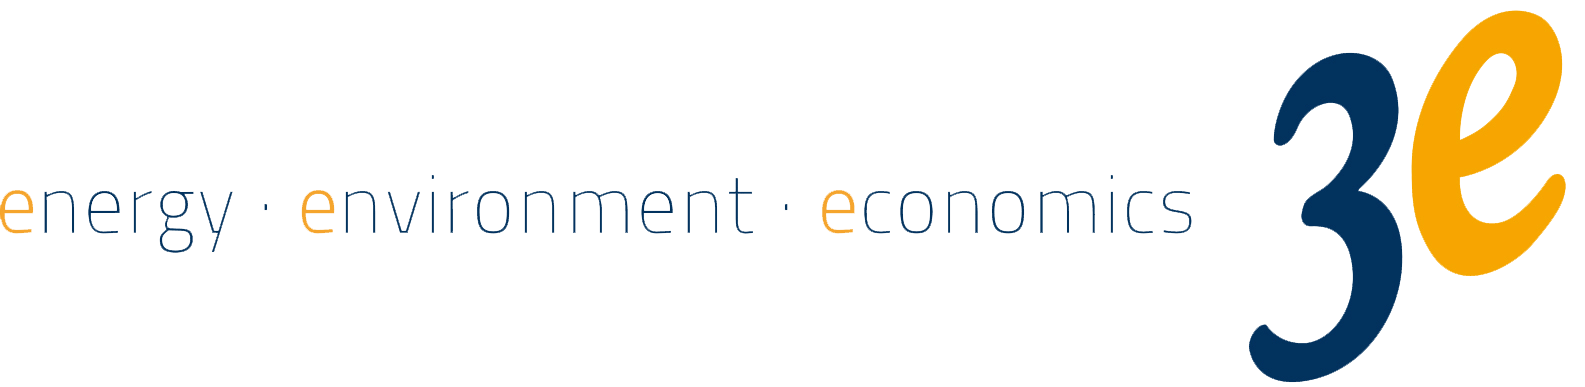 energy-environment-economics-3e-gmbh-logo